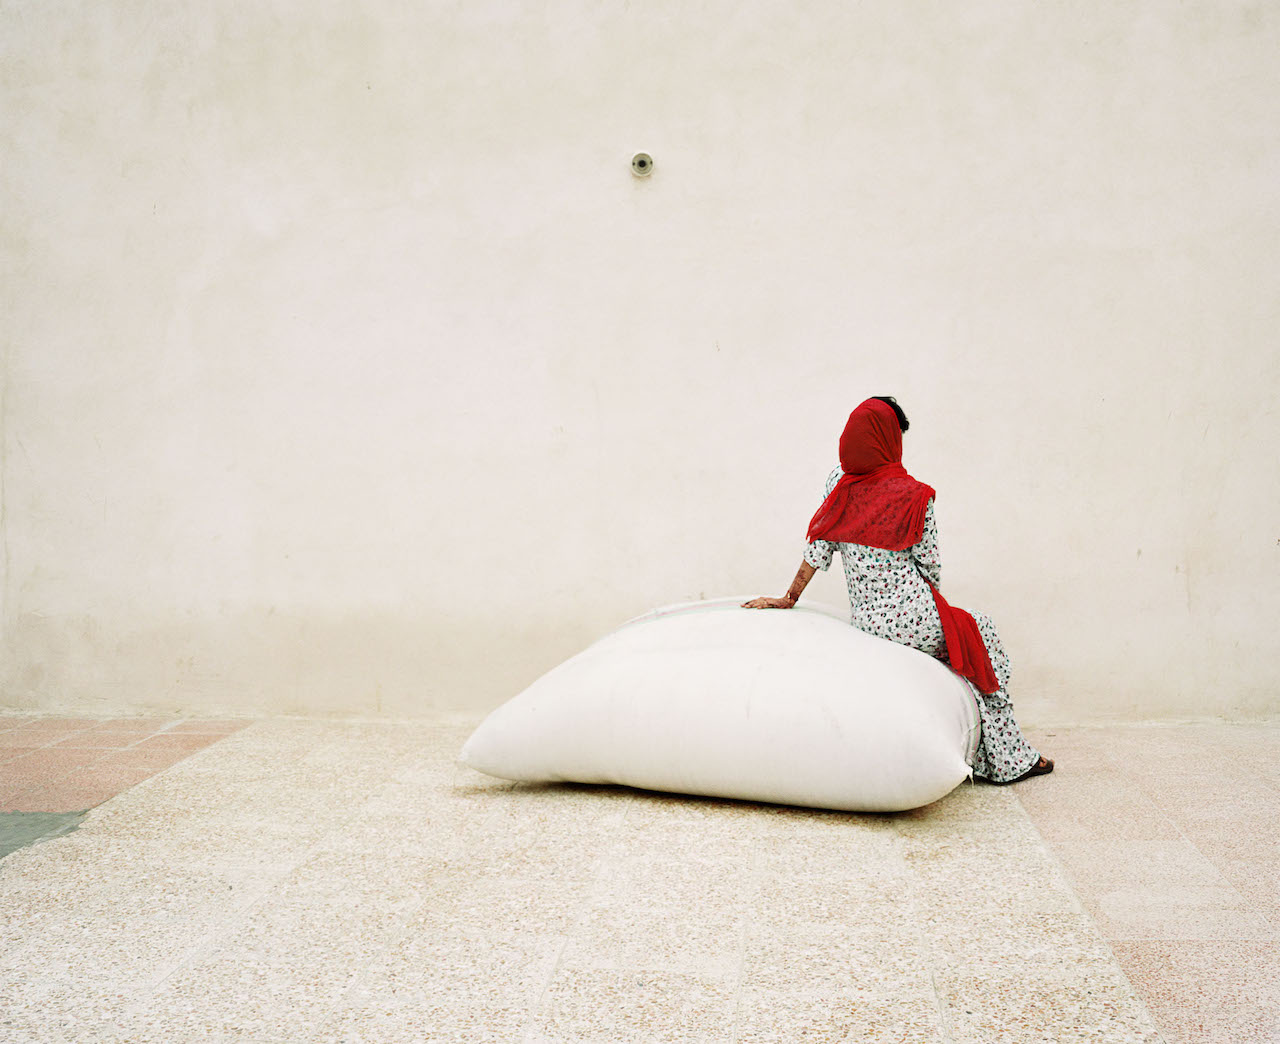 Hoda Afshar, Untitled, from the series Speak the Wind, Iran